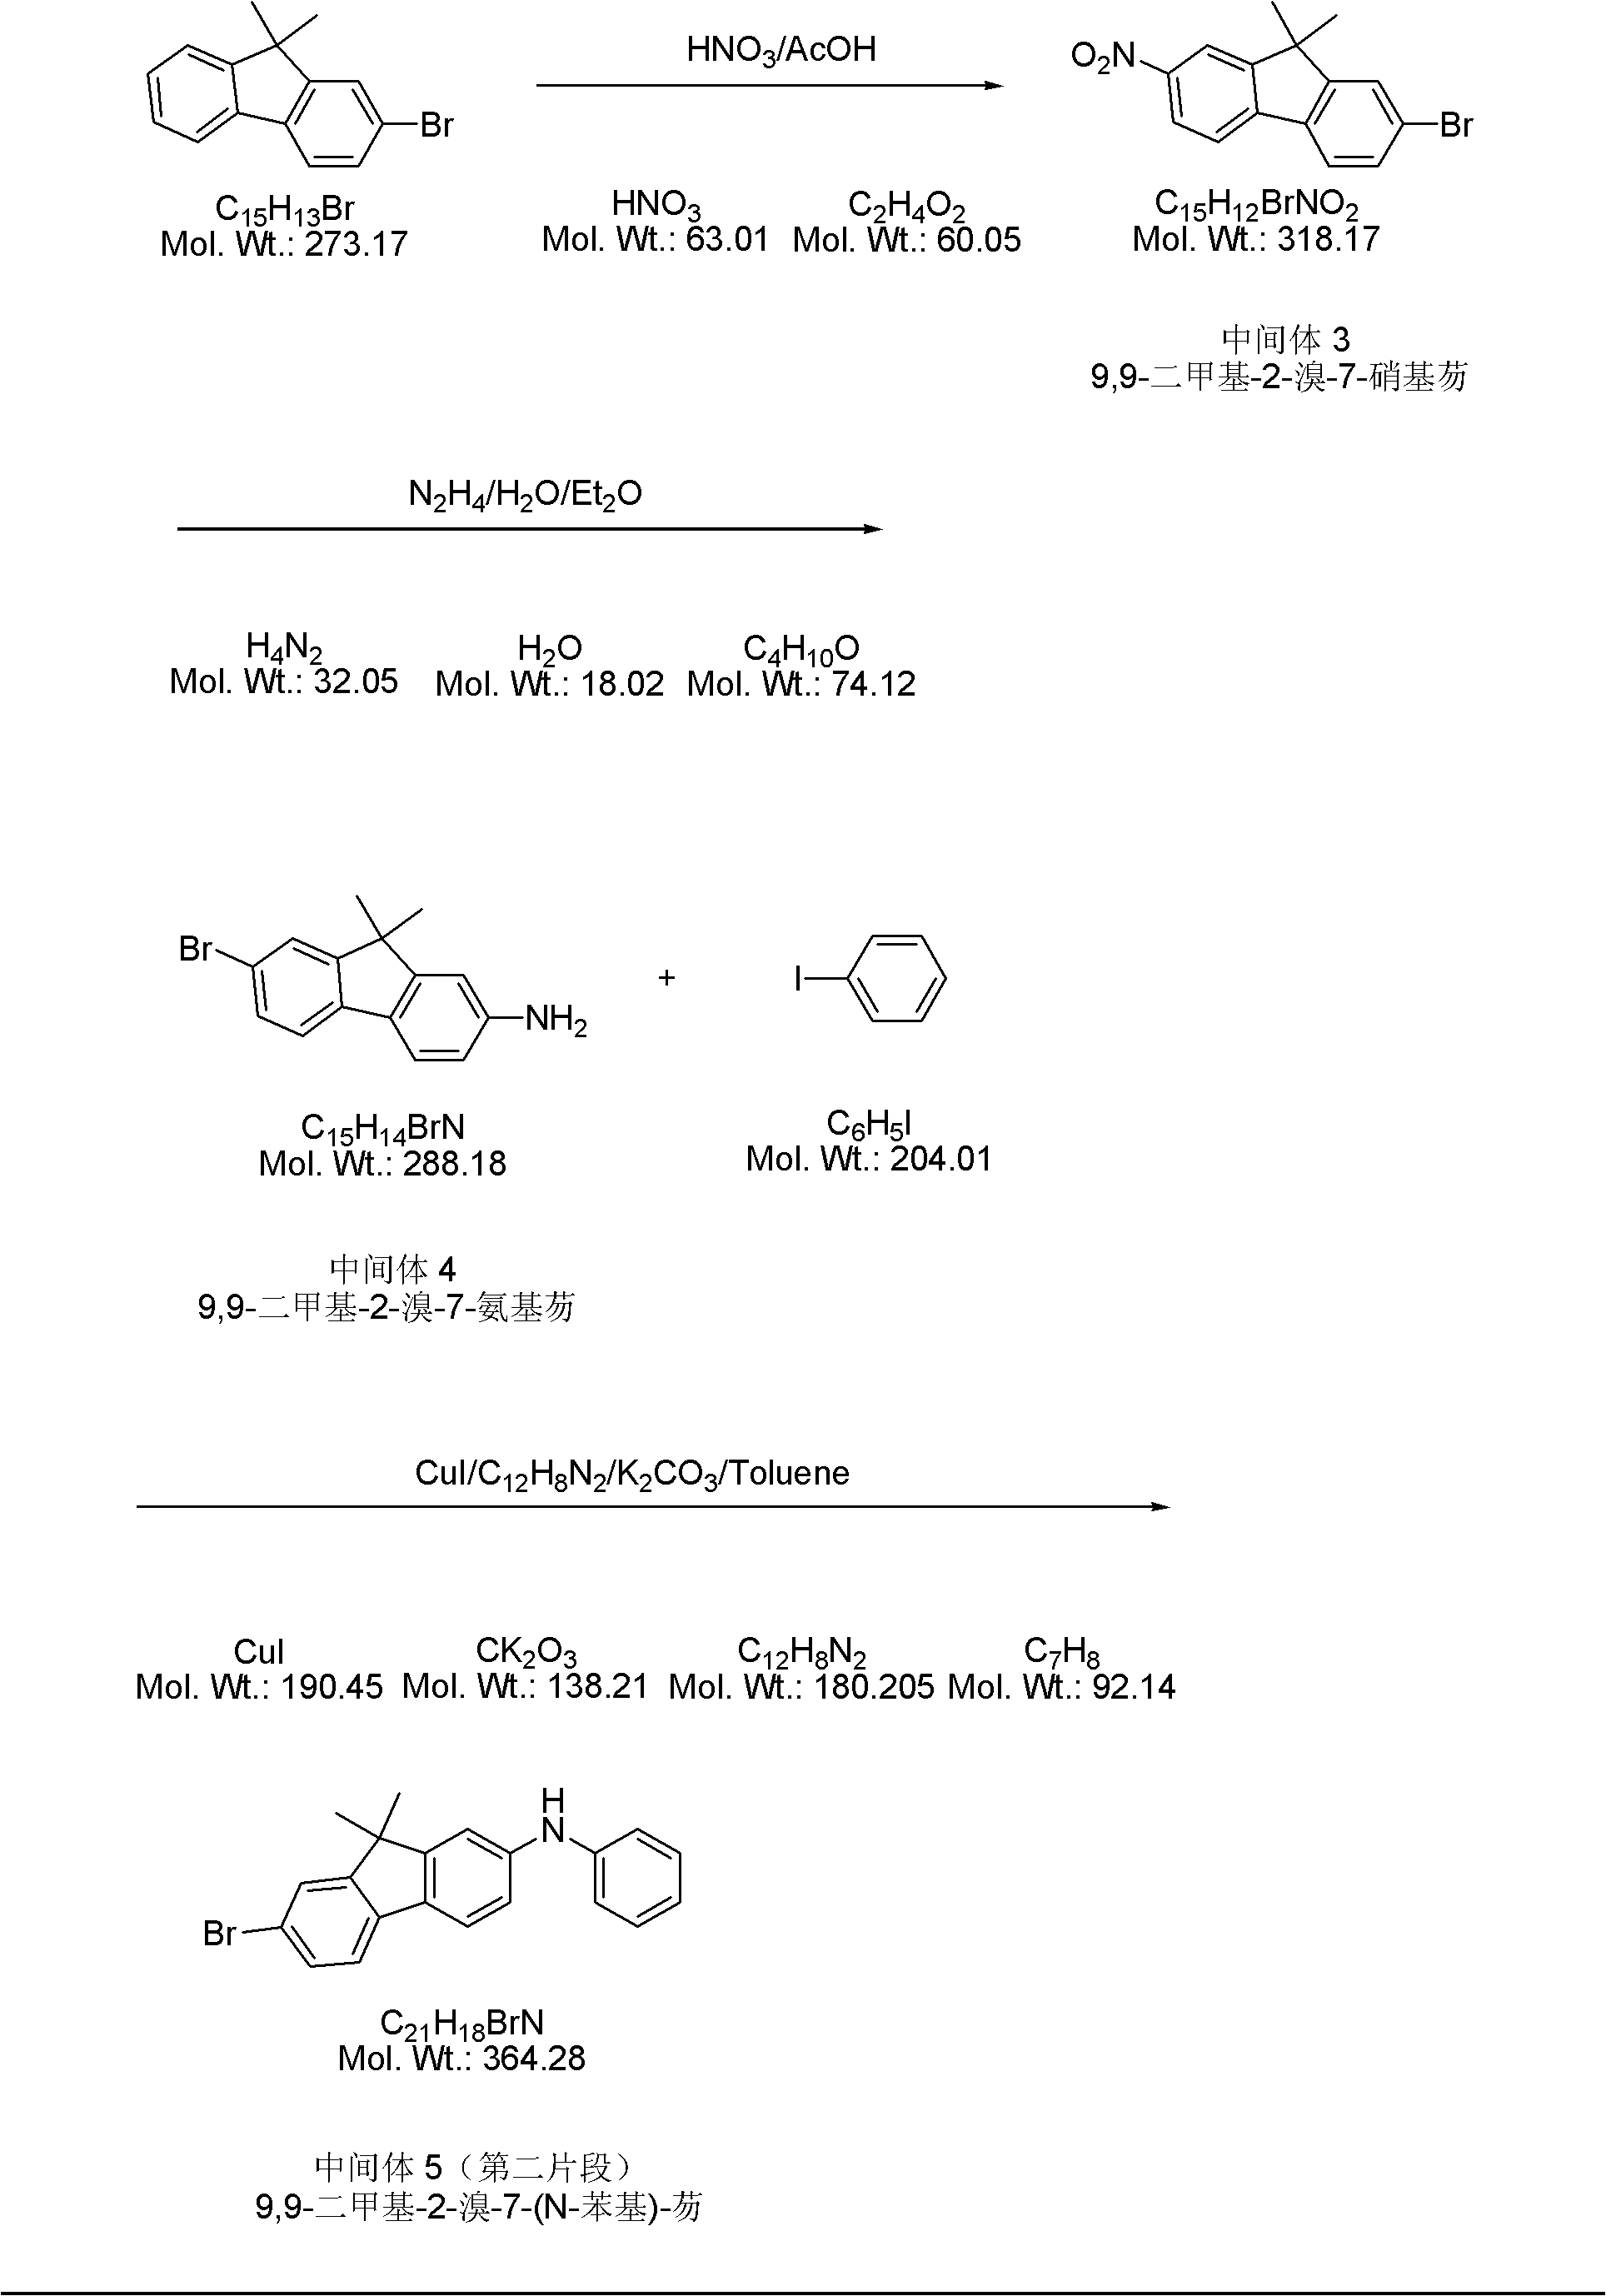 Method for synthesizing N,N'-diphenyl-N-(9,9-dimethyl-2-fluorenyl)-N'-(9',9'-dimethyl-7'-bromo-2'-fluorenyl)-benzidine